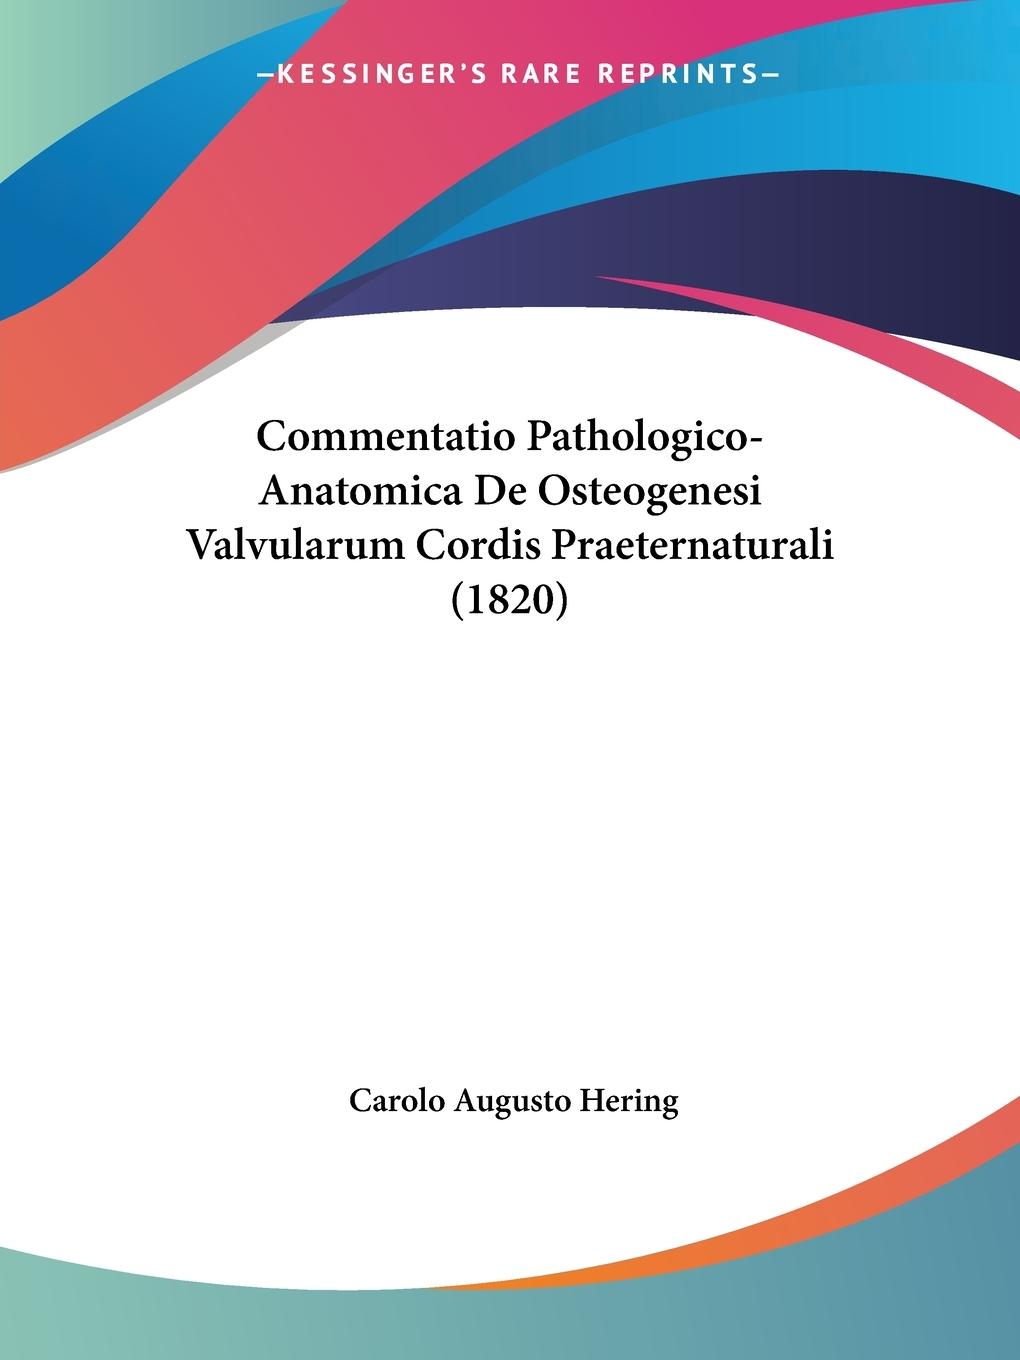 Commentatio Pathologico-Anatomica De Osteogenesi Valvularum Cordis Praeternaturali (1820) - Hering, Carolo Augusto